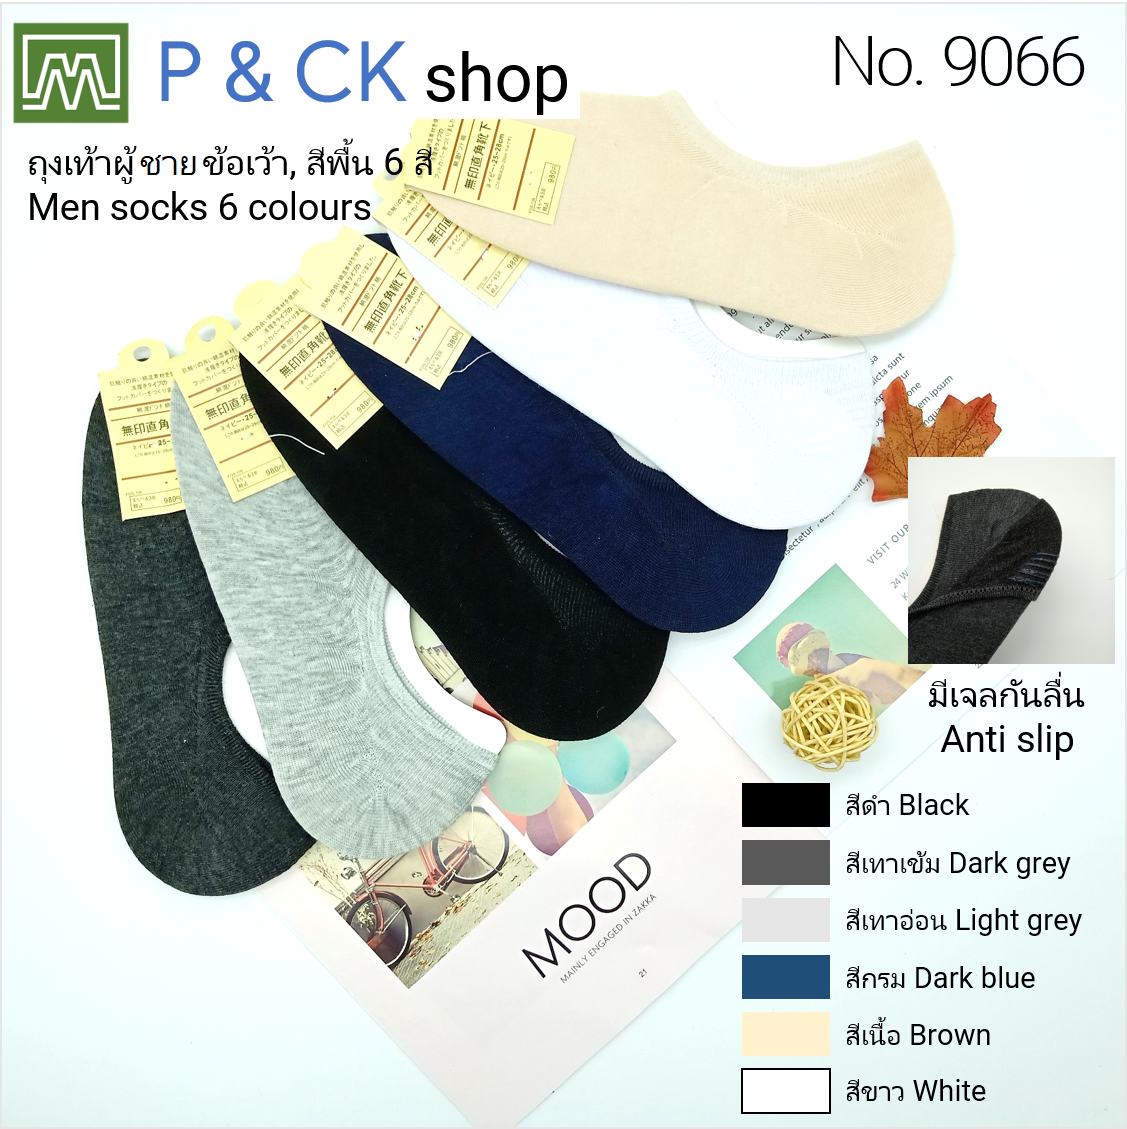 P & CK / ถุงเท้าผู้ชายข้อเว้าฟรีไซส์ [มีกันลื่น] #9066 [ขายเป็นคู่]: สีพื้น, เลือกได้ 5 สี, กรุณาเลือกให้ดี [เลือกสีโปรดกด "เพิ่มลงรถเข็น"]